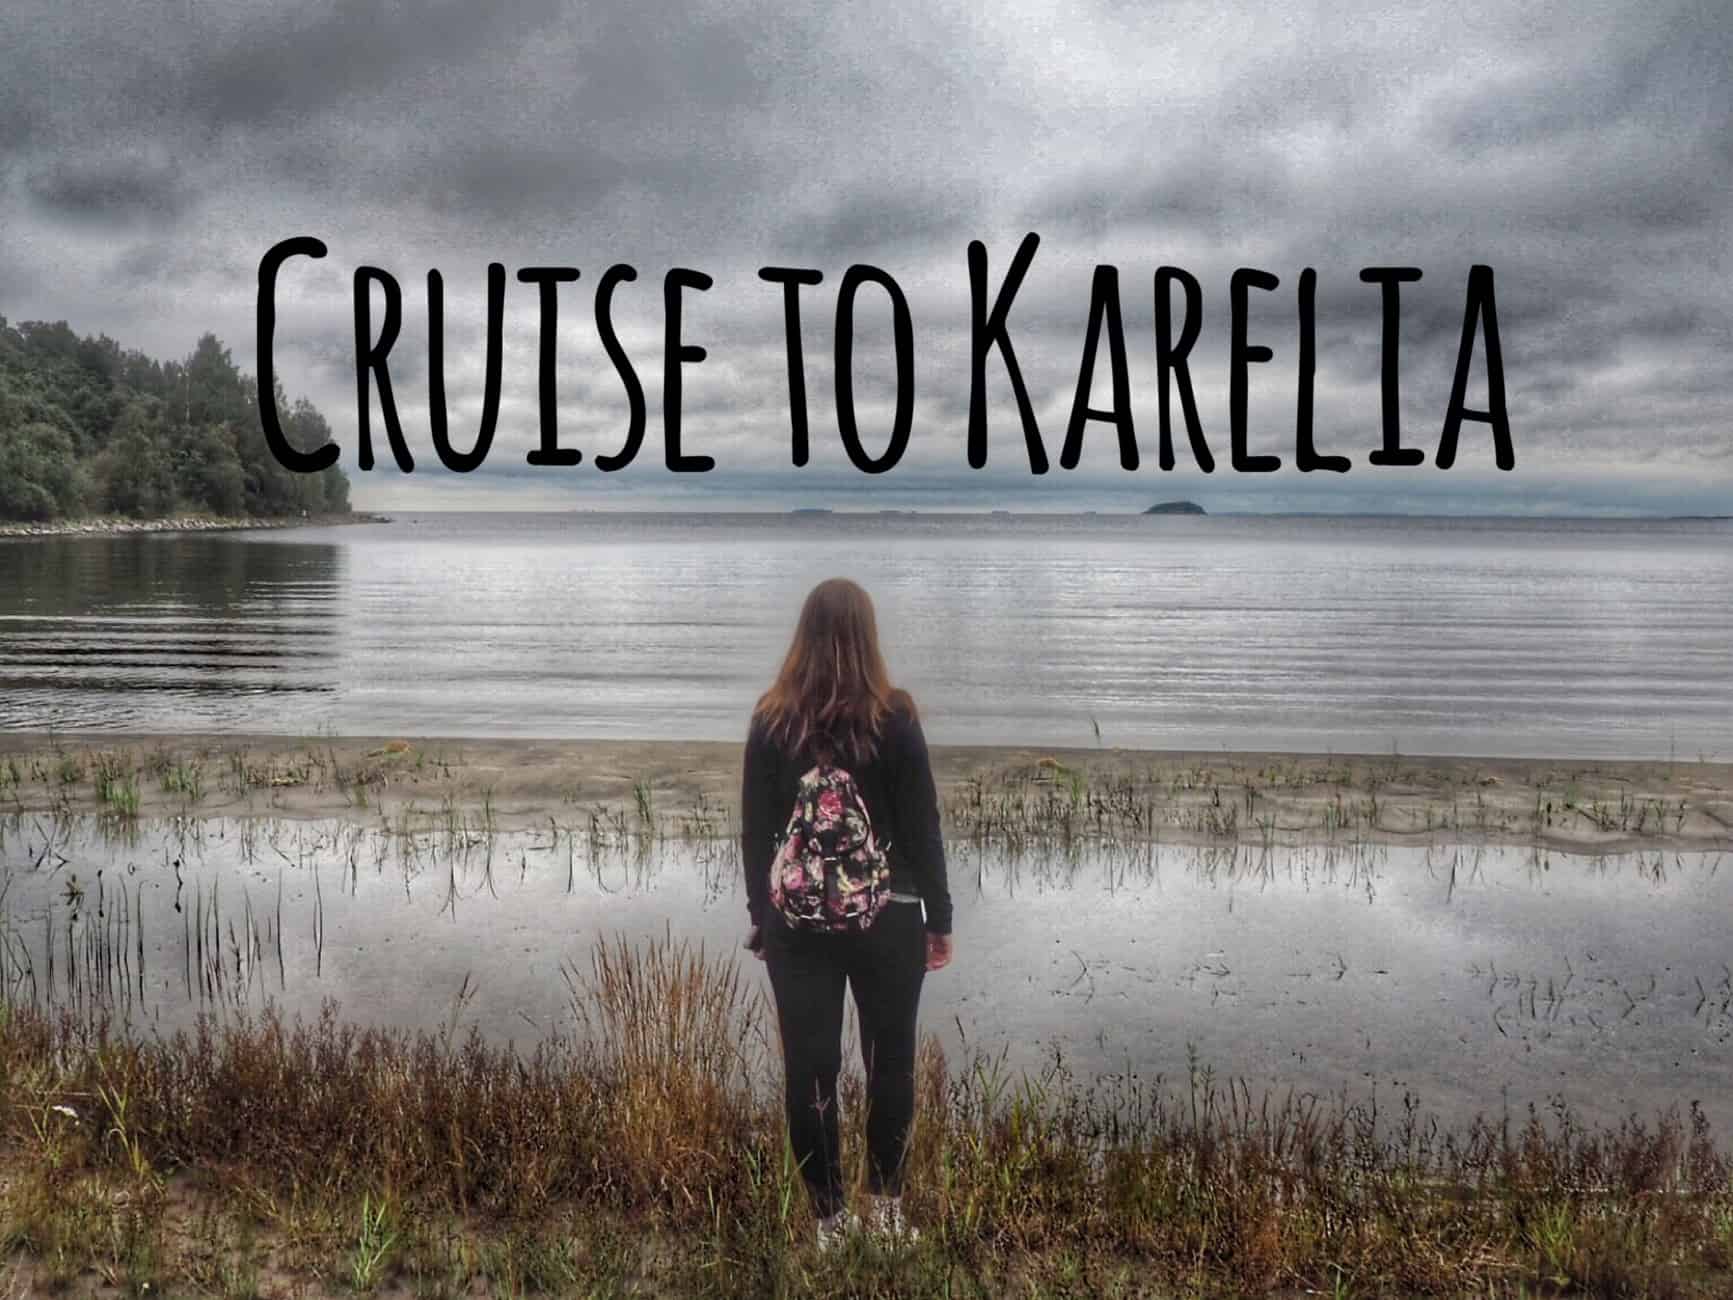 Cruise to Karelia: North of Russia – Ruskeala, Sortavala and Pellotsari